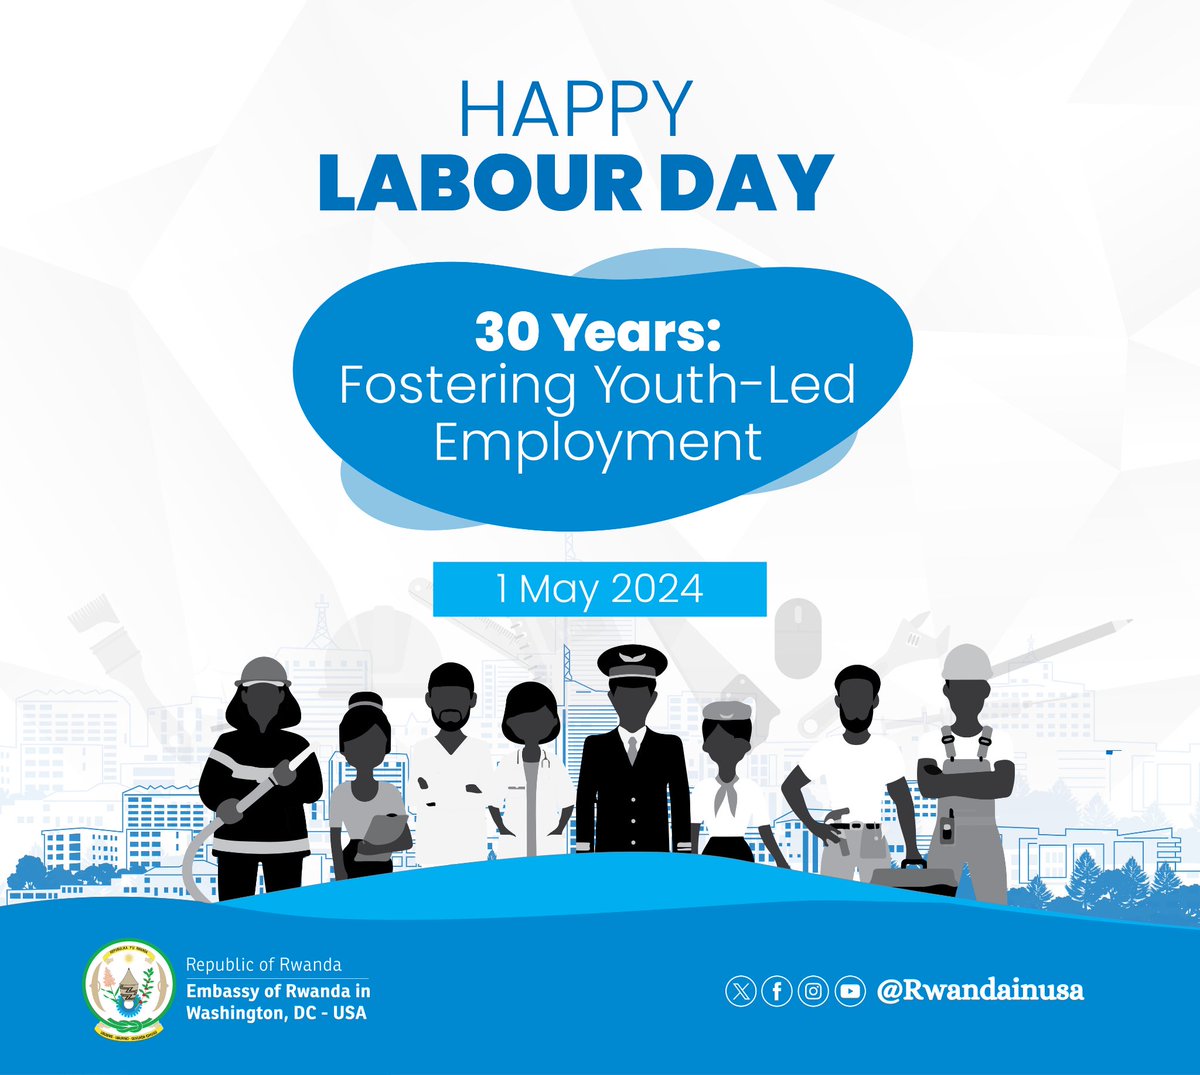 Happy #LaborDay2024